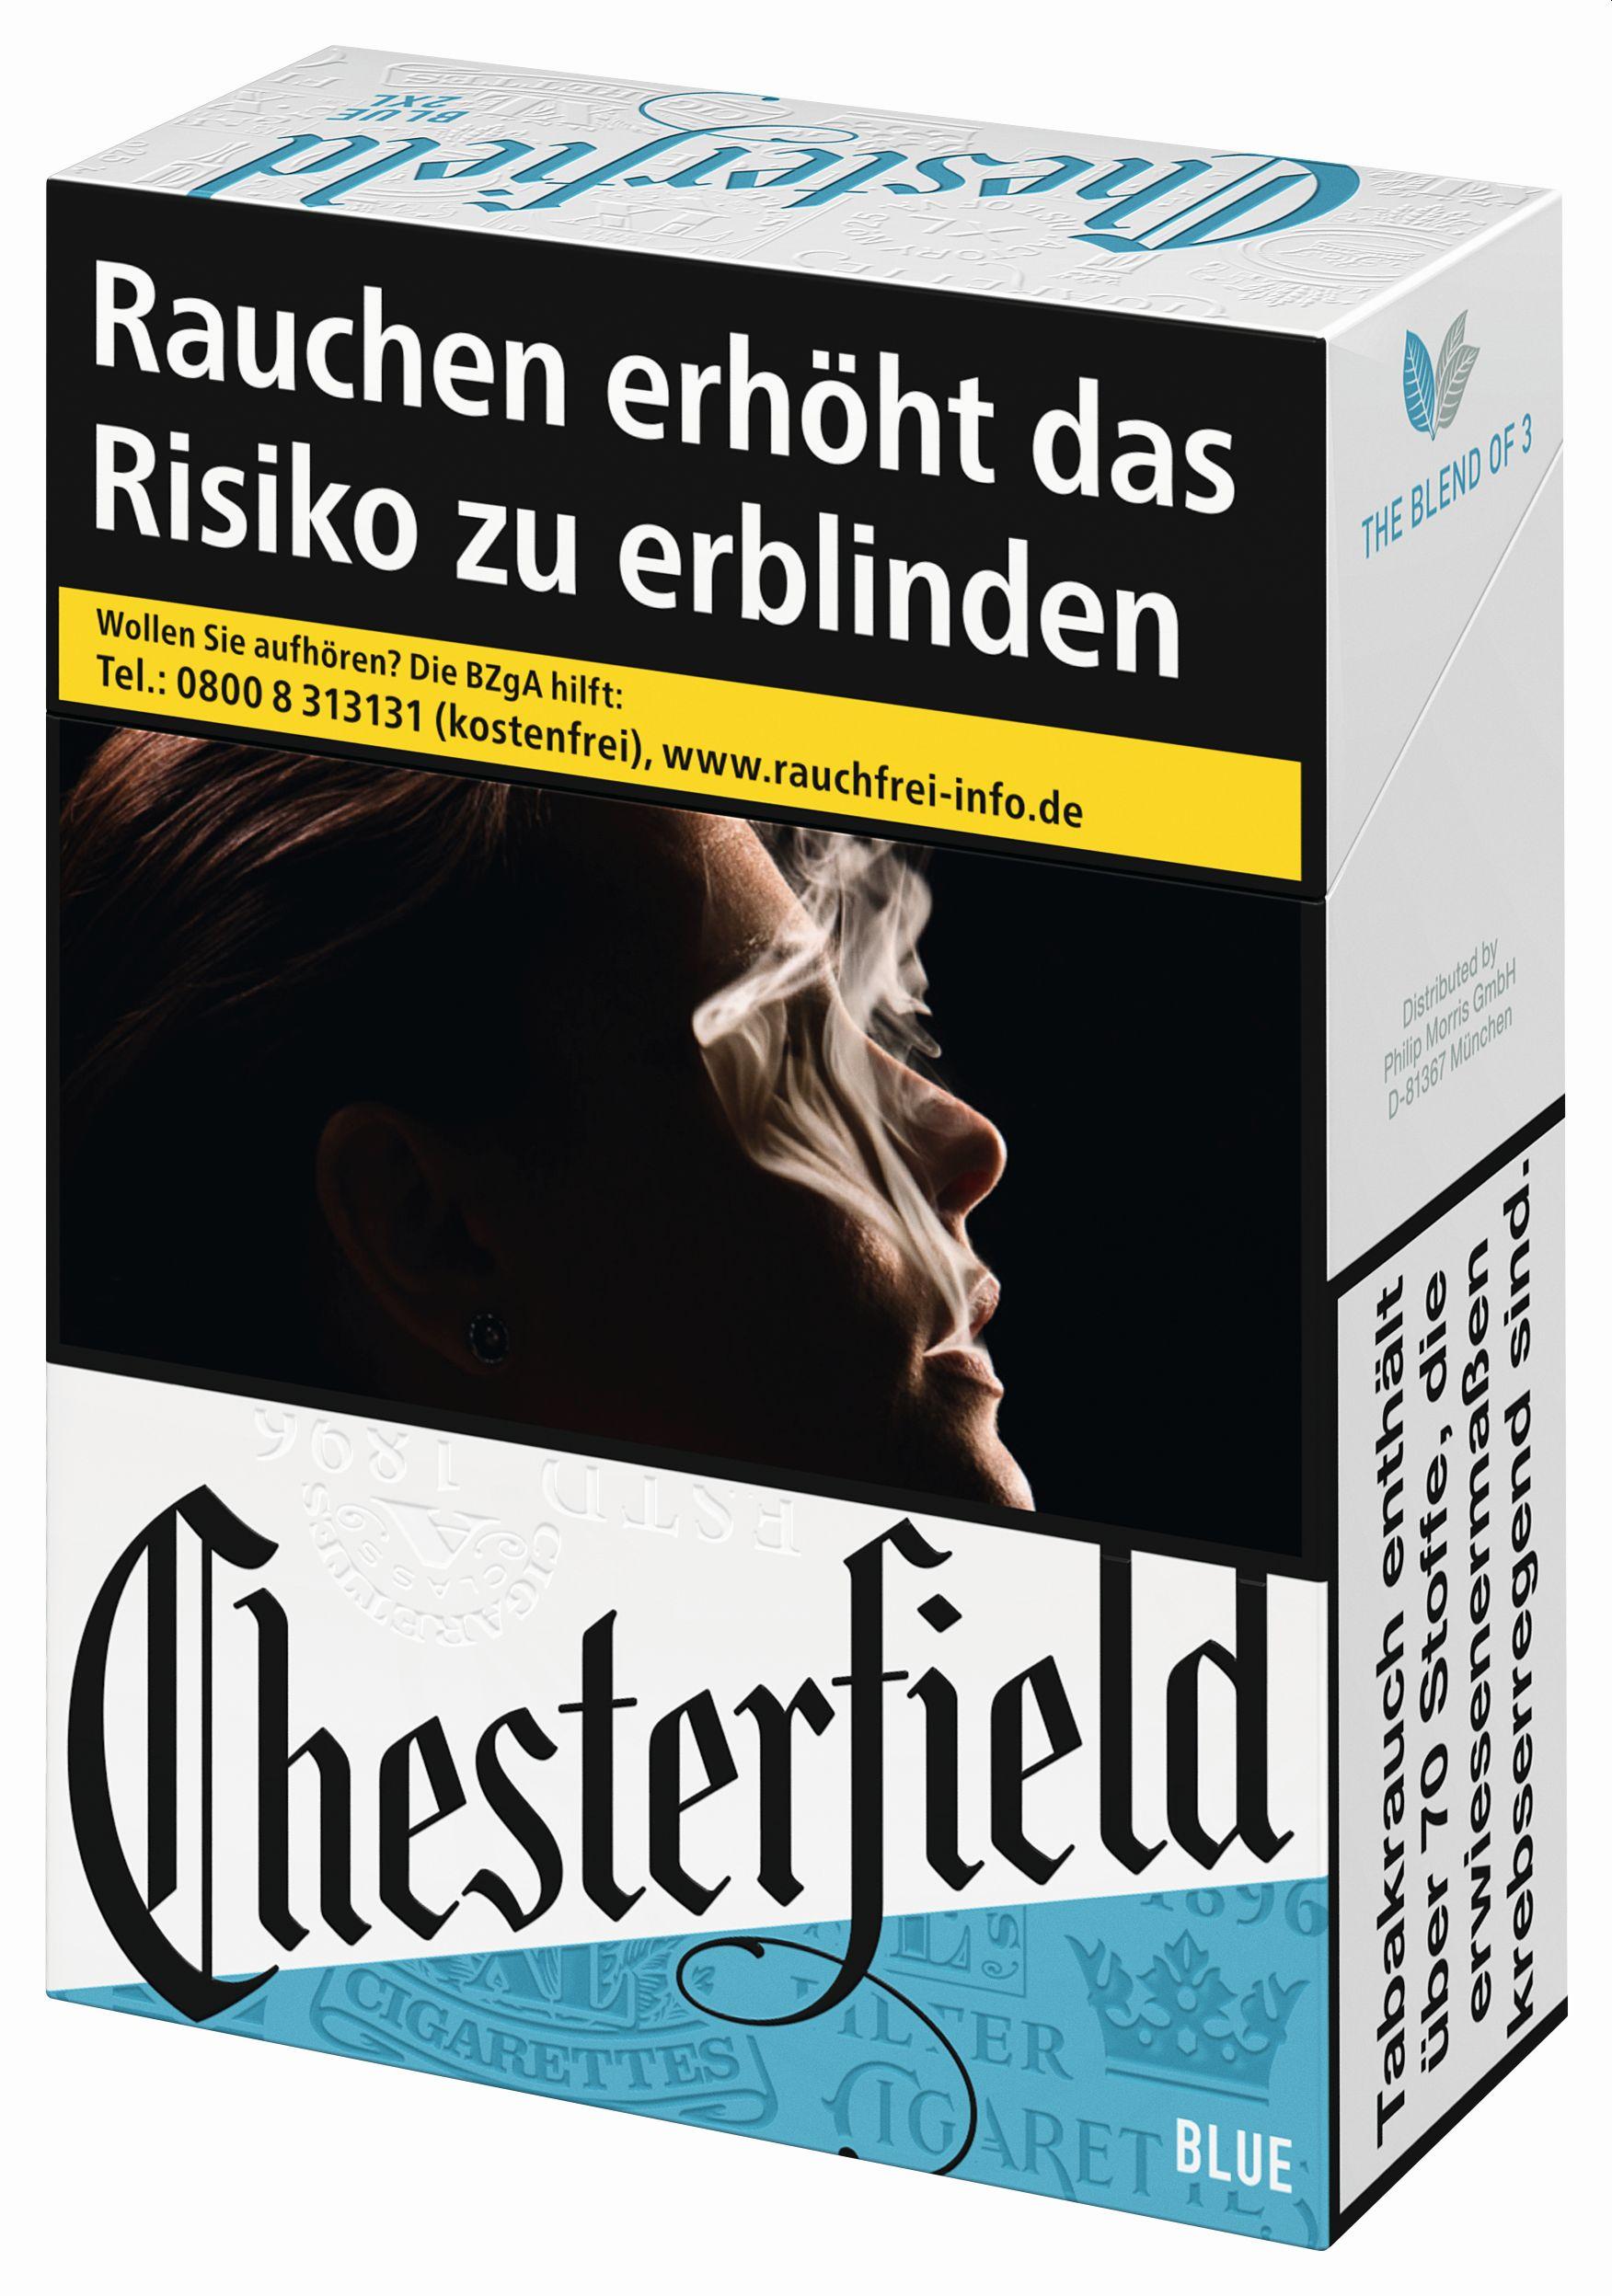 Chesterfield Blue XL Zigaretten 1 Stange